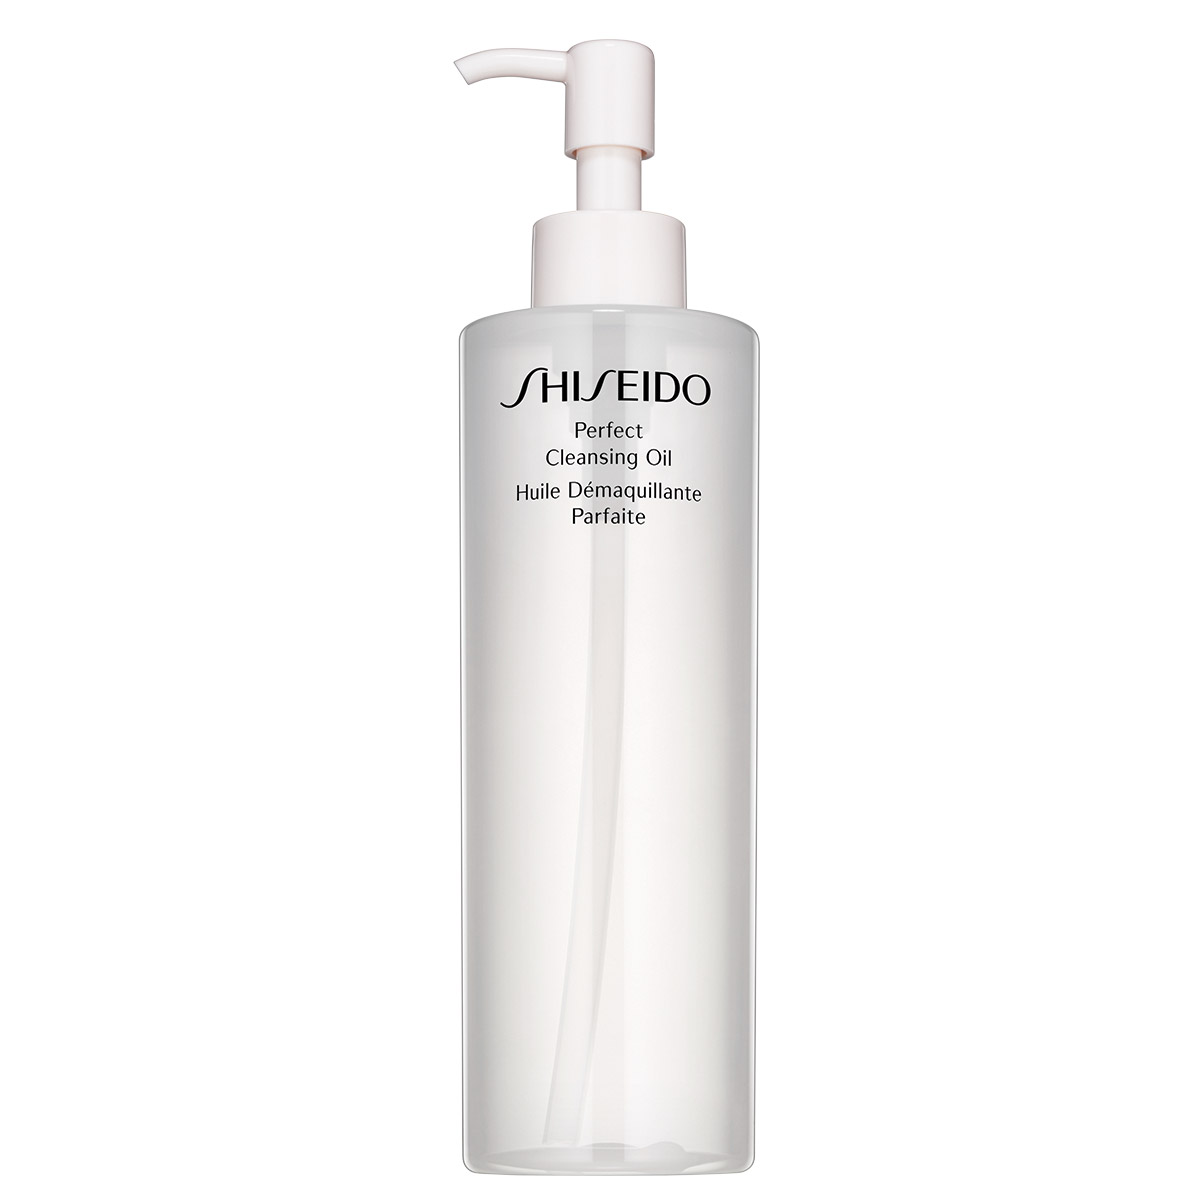  Shiseido Perfect Cleansing Oil Korean Skin Care Routine